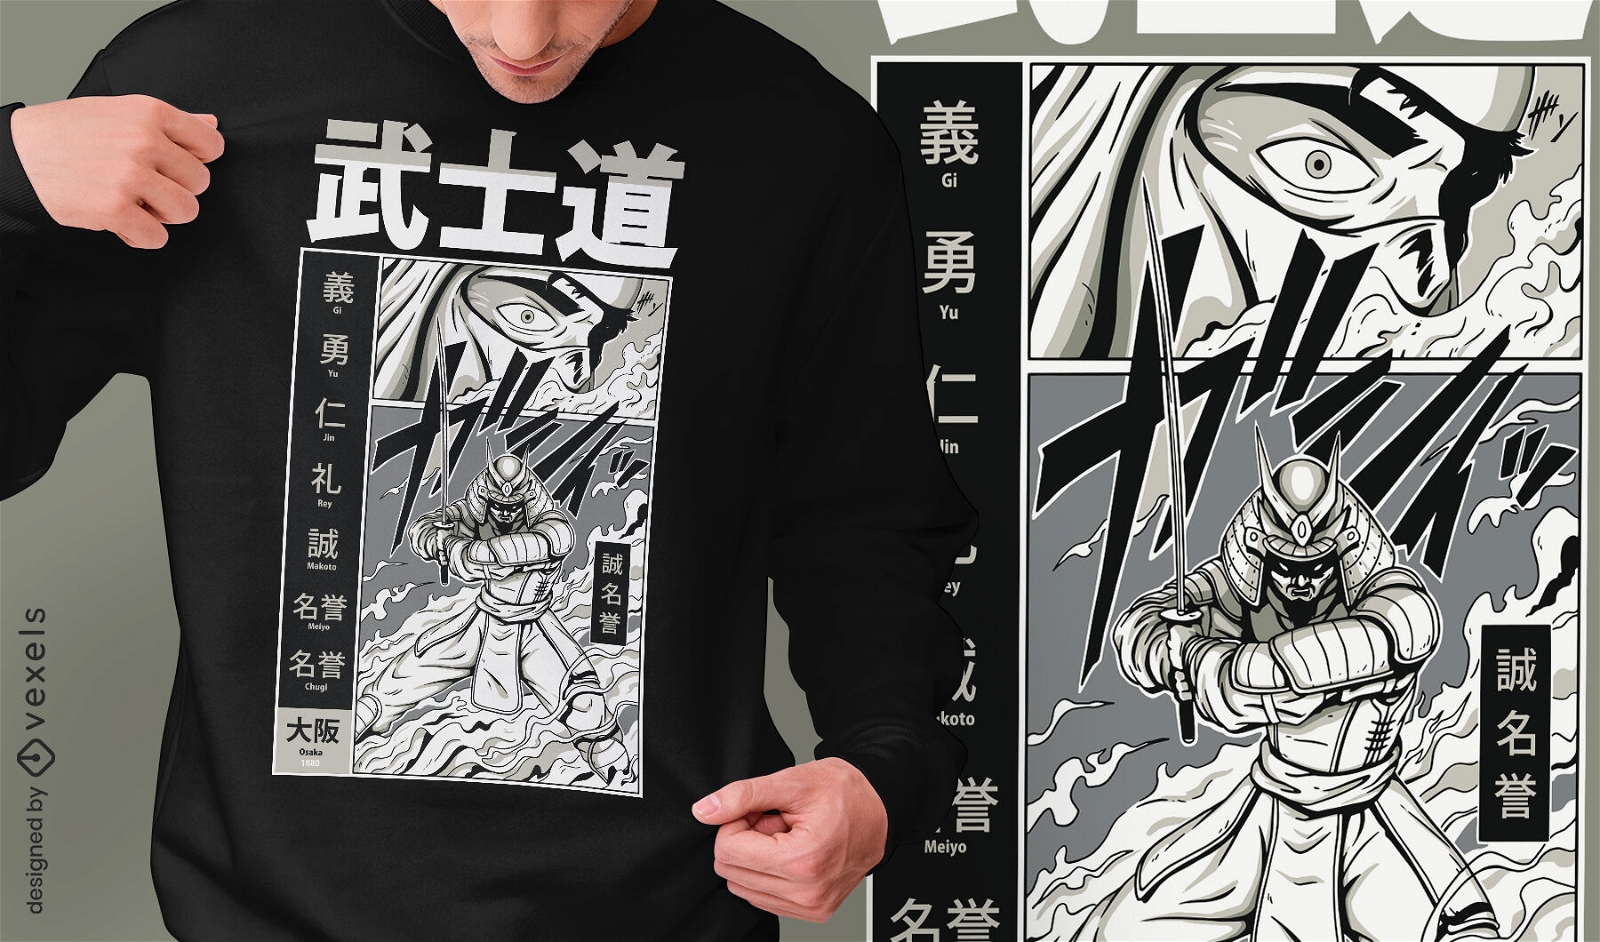 Japanese bushido warrior t-shirt design